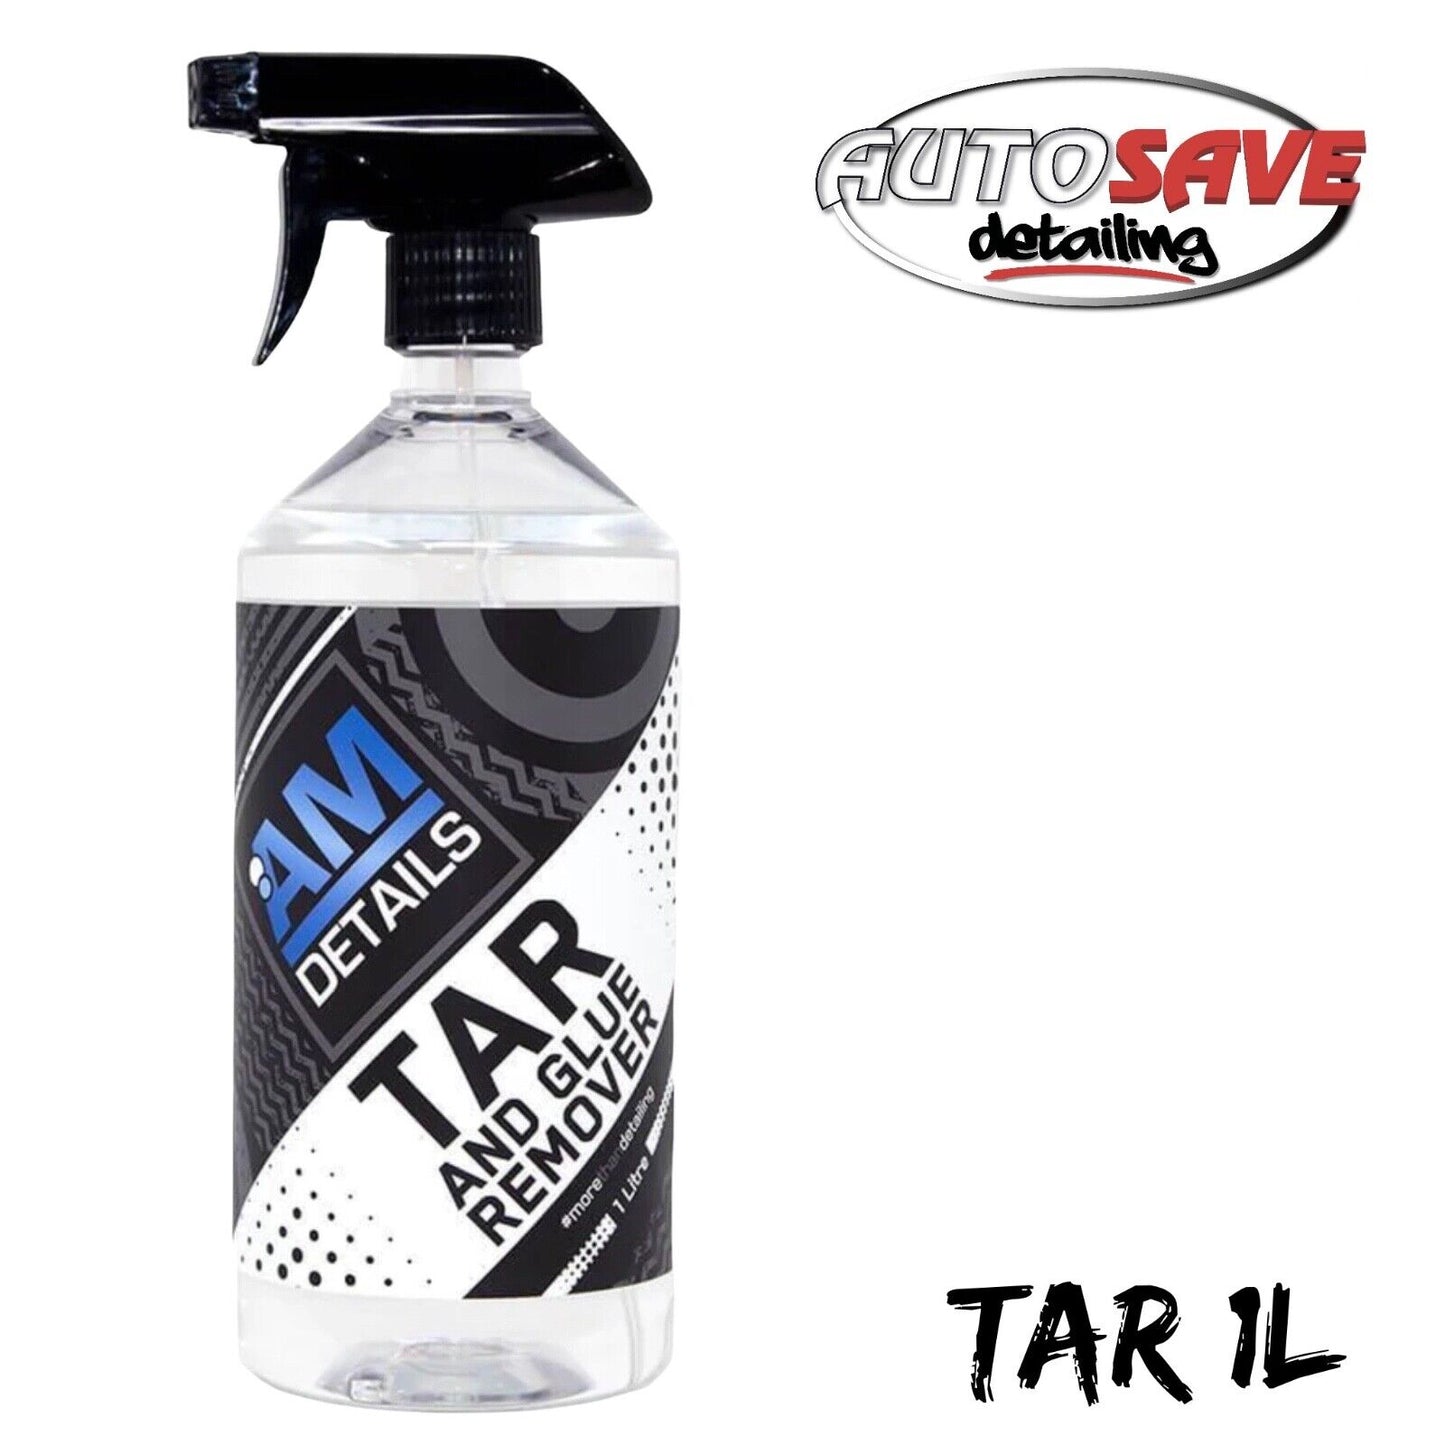 AM Tar - AM Details Tar & Glue Remover